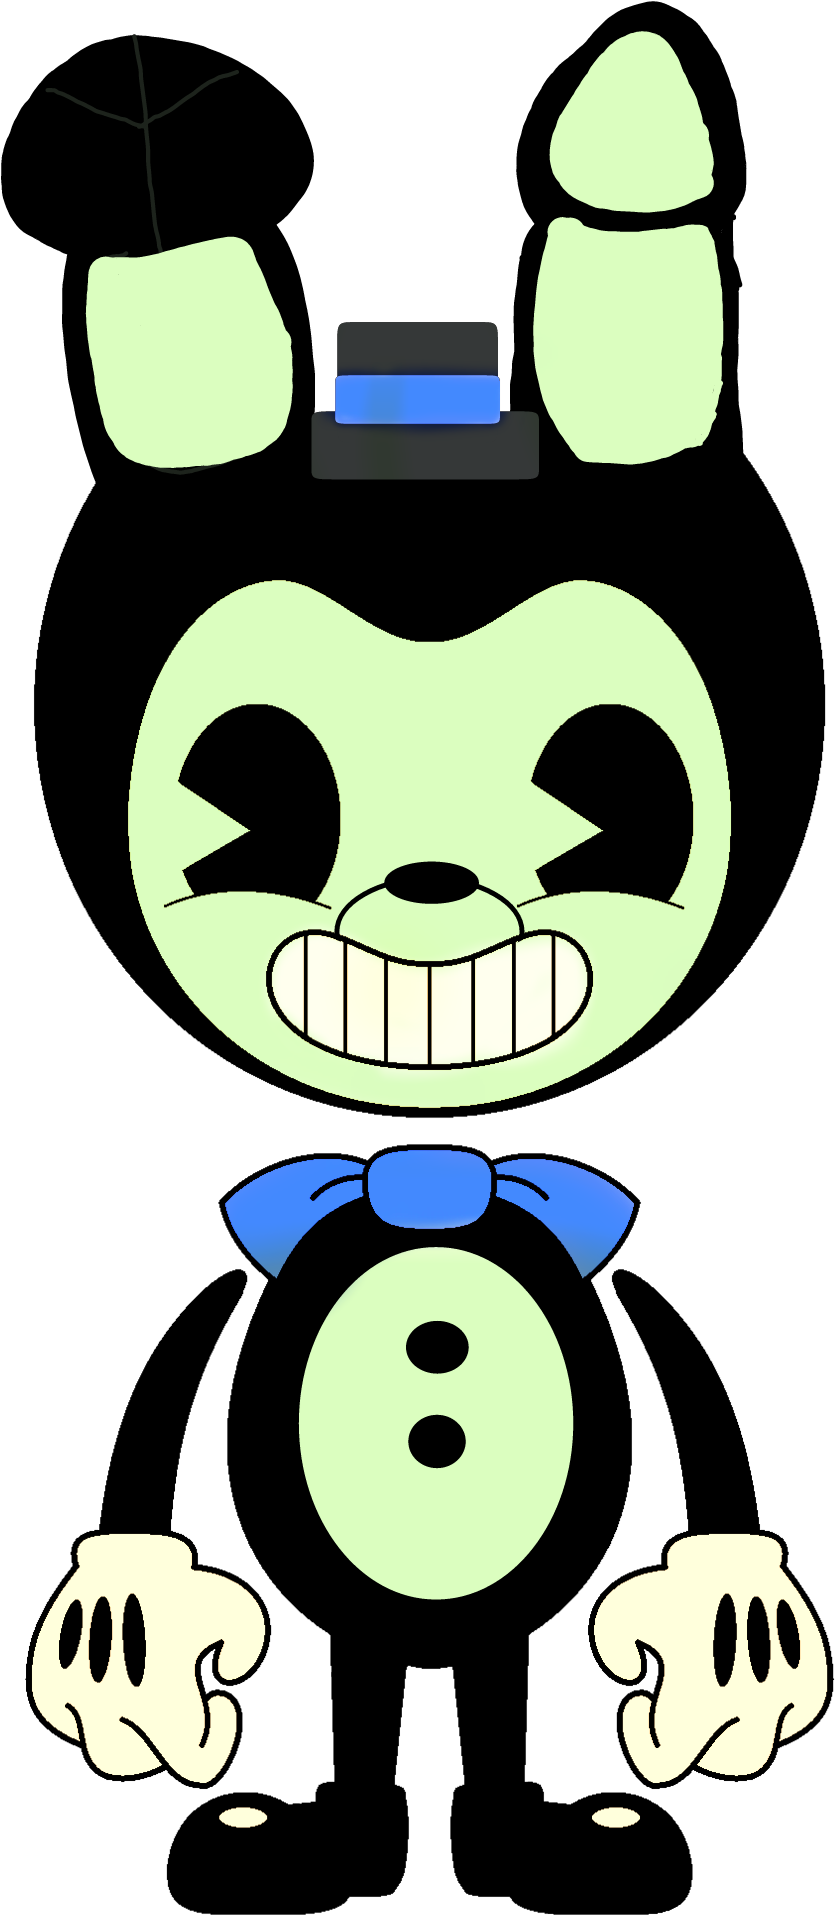 Bendy Cartoon Character Standing PNG image